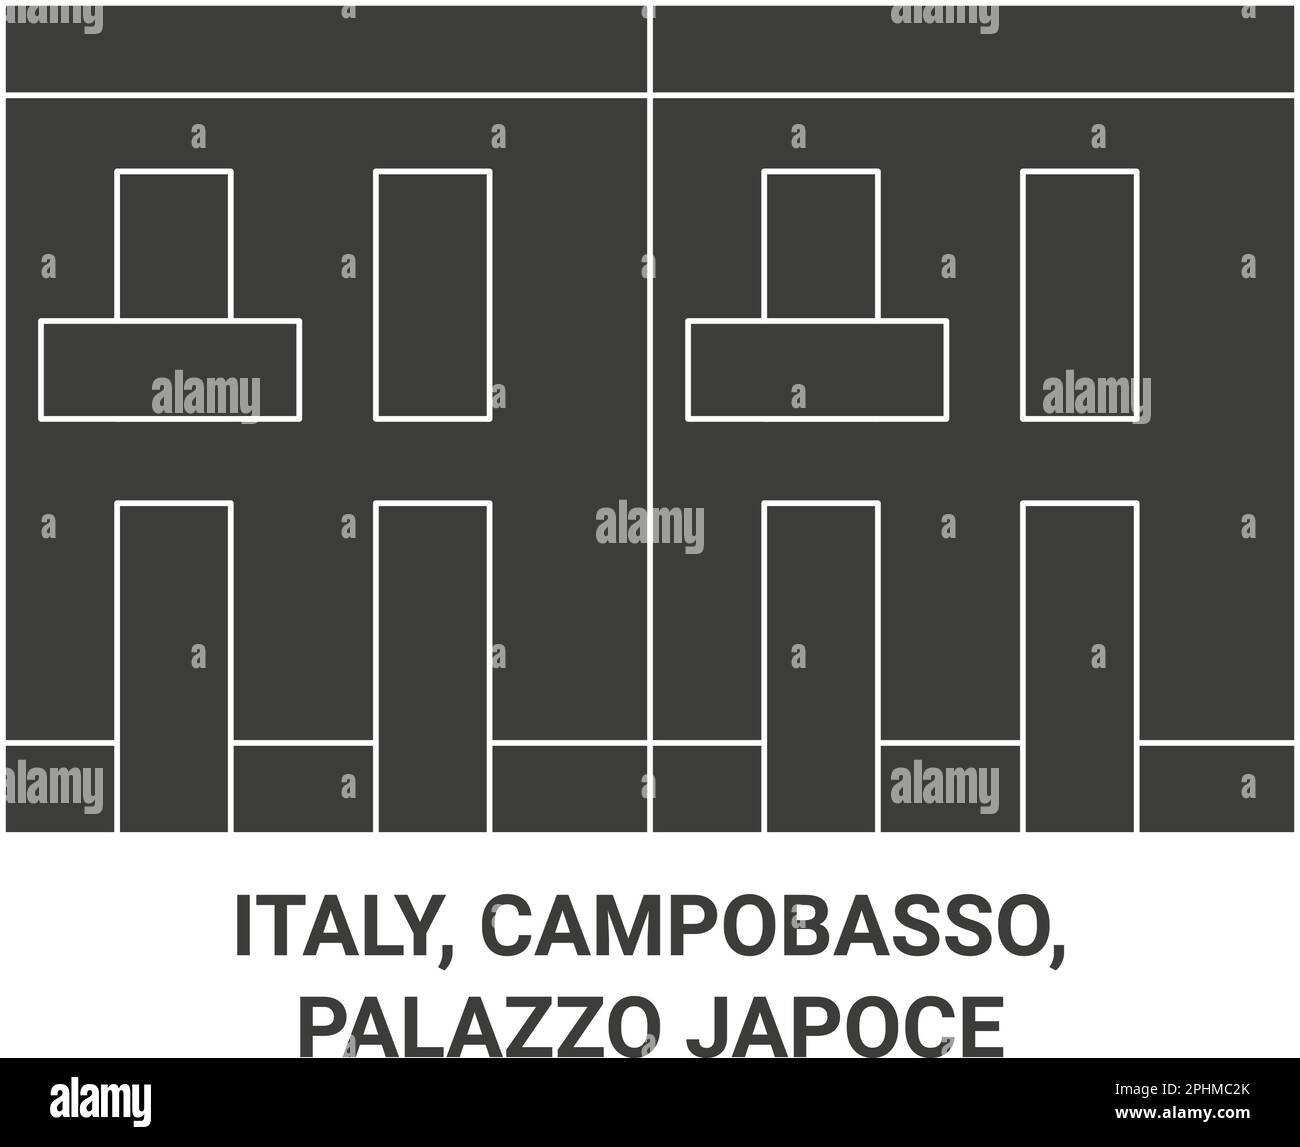 Italy, Campobasso, Palazzo Japoce travel landmark vector illustration Stock Vector